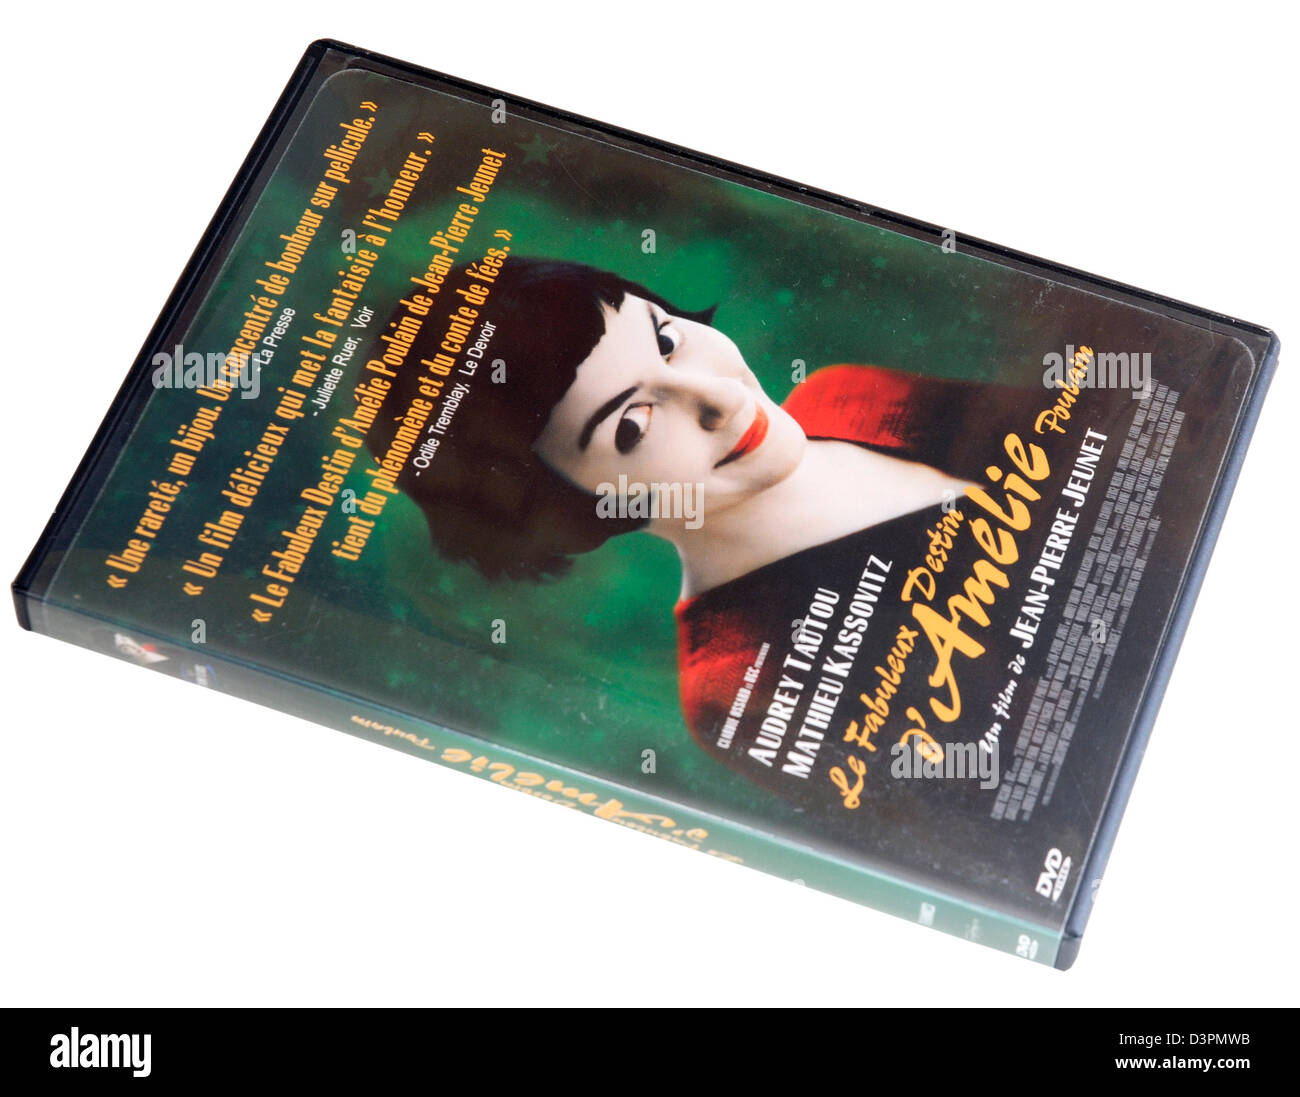 Amelie Poulain film DVD Stock Photo